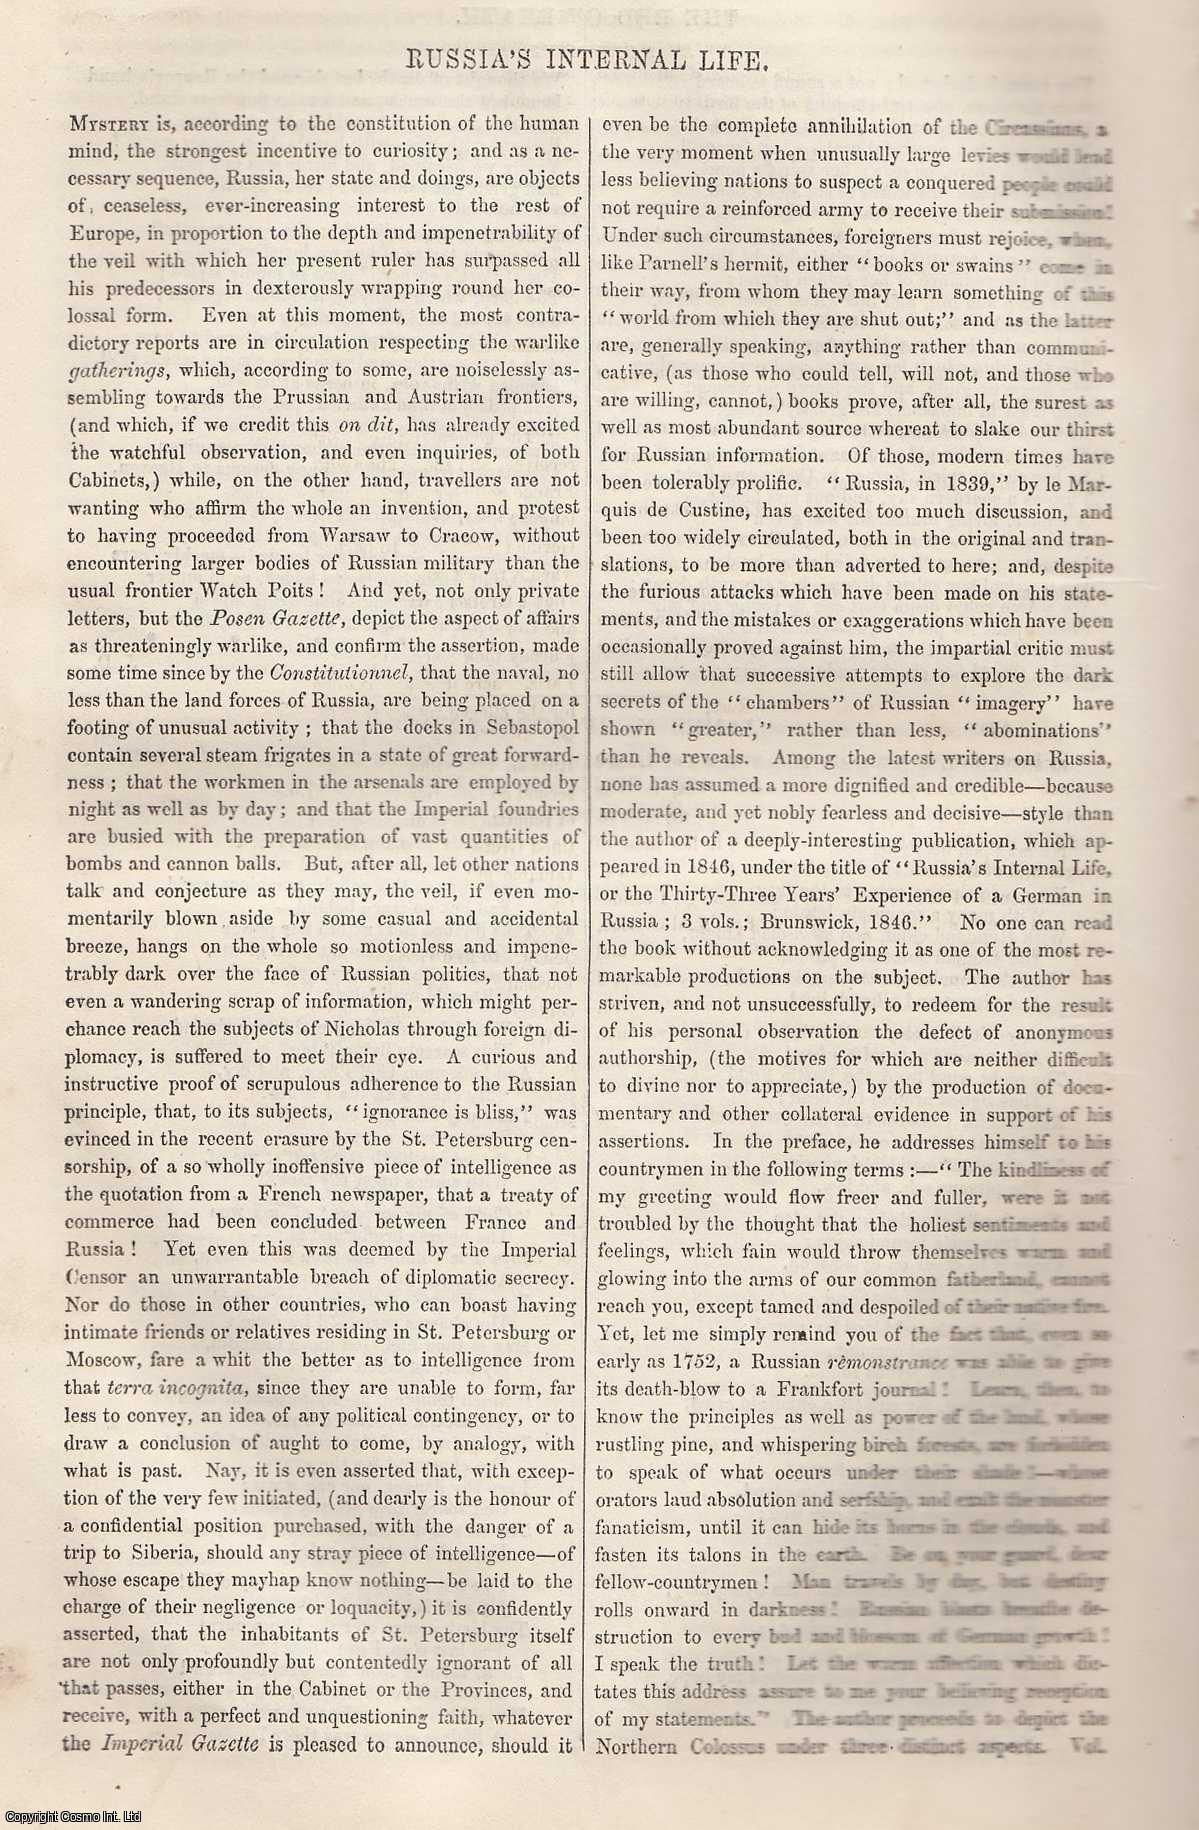 --- - Russia's Internal Life. An original article from Tait's Edinburgh Magazine, 1847.